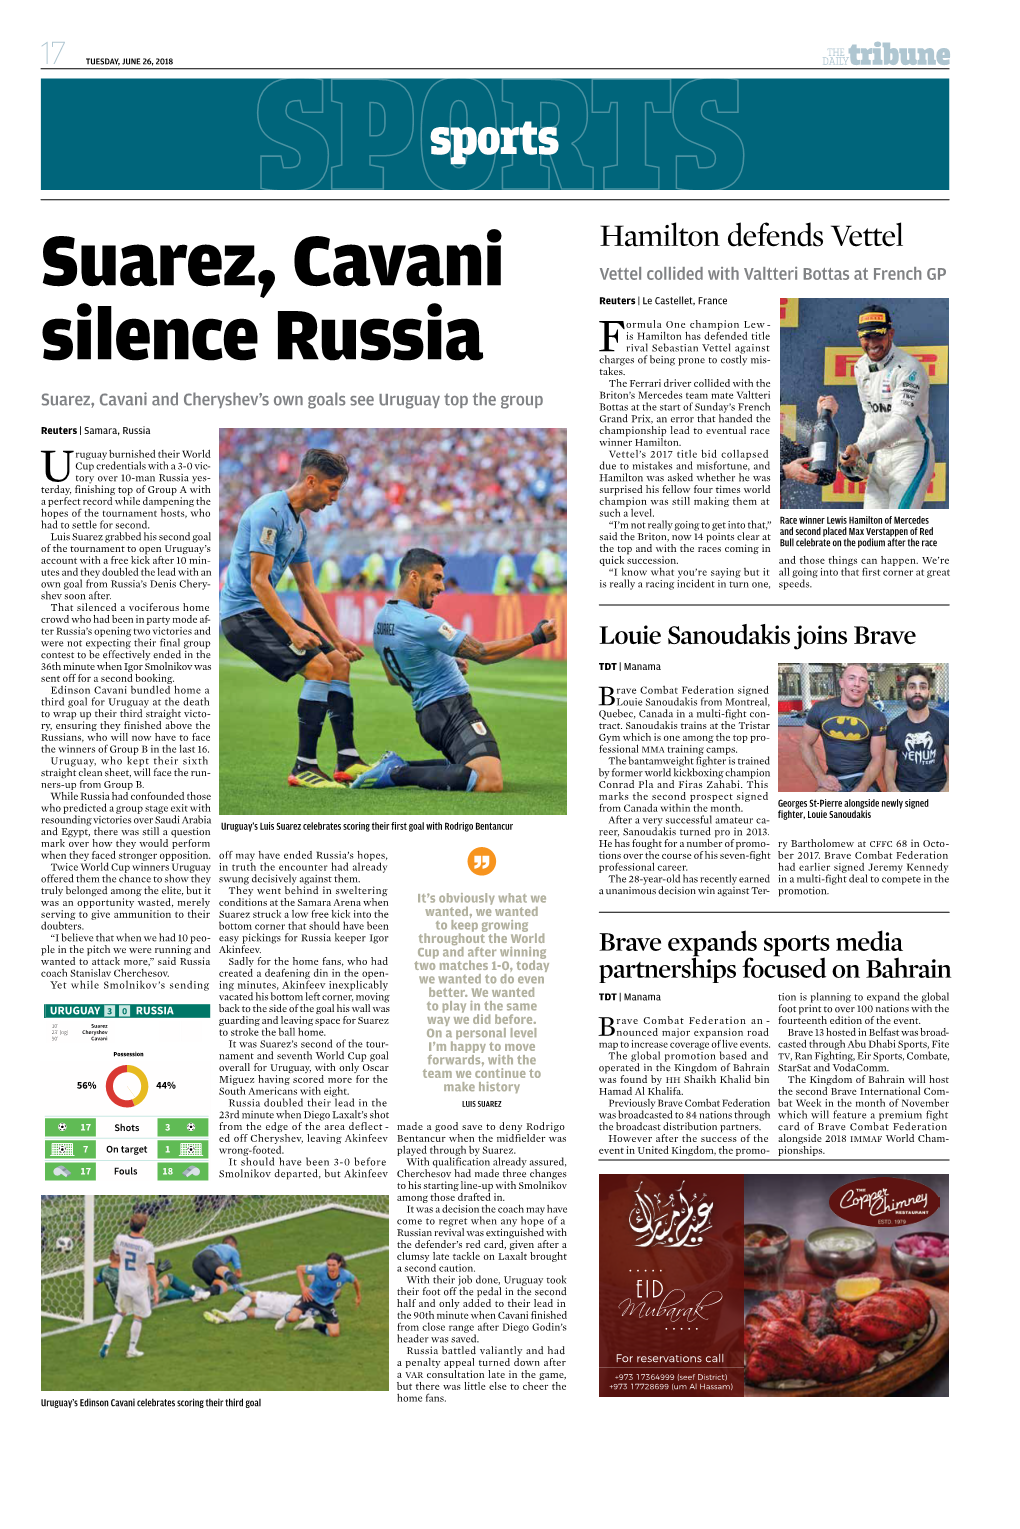 Suarez, Cavani Silence Russia